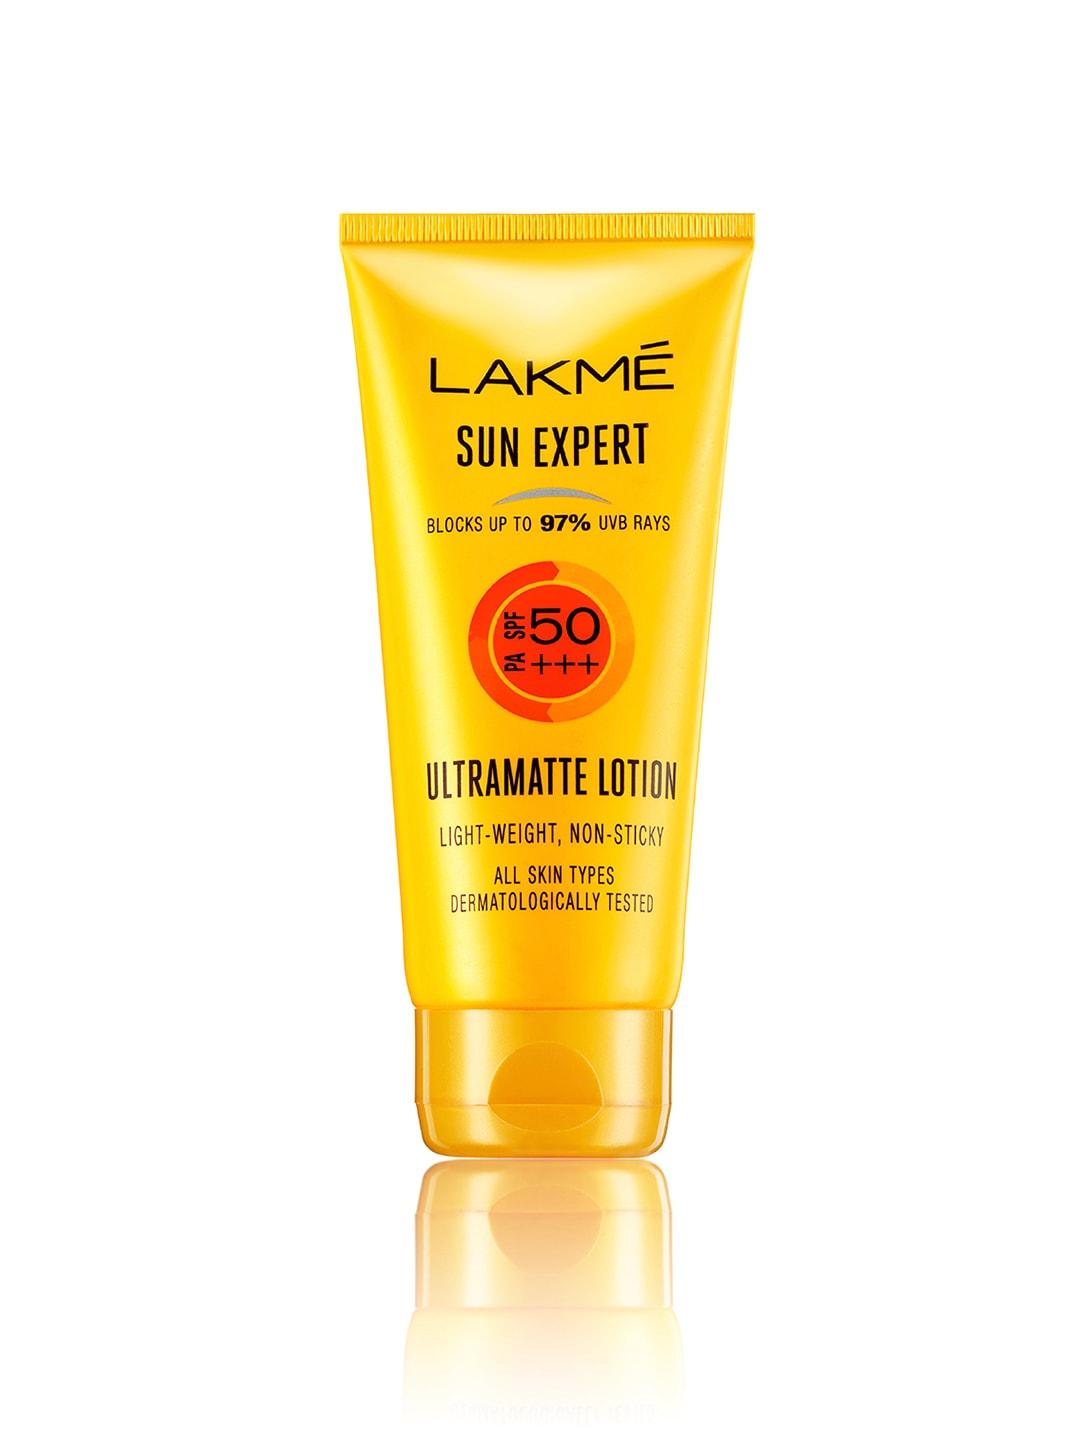 Lakme Sun Expert UV Lotion